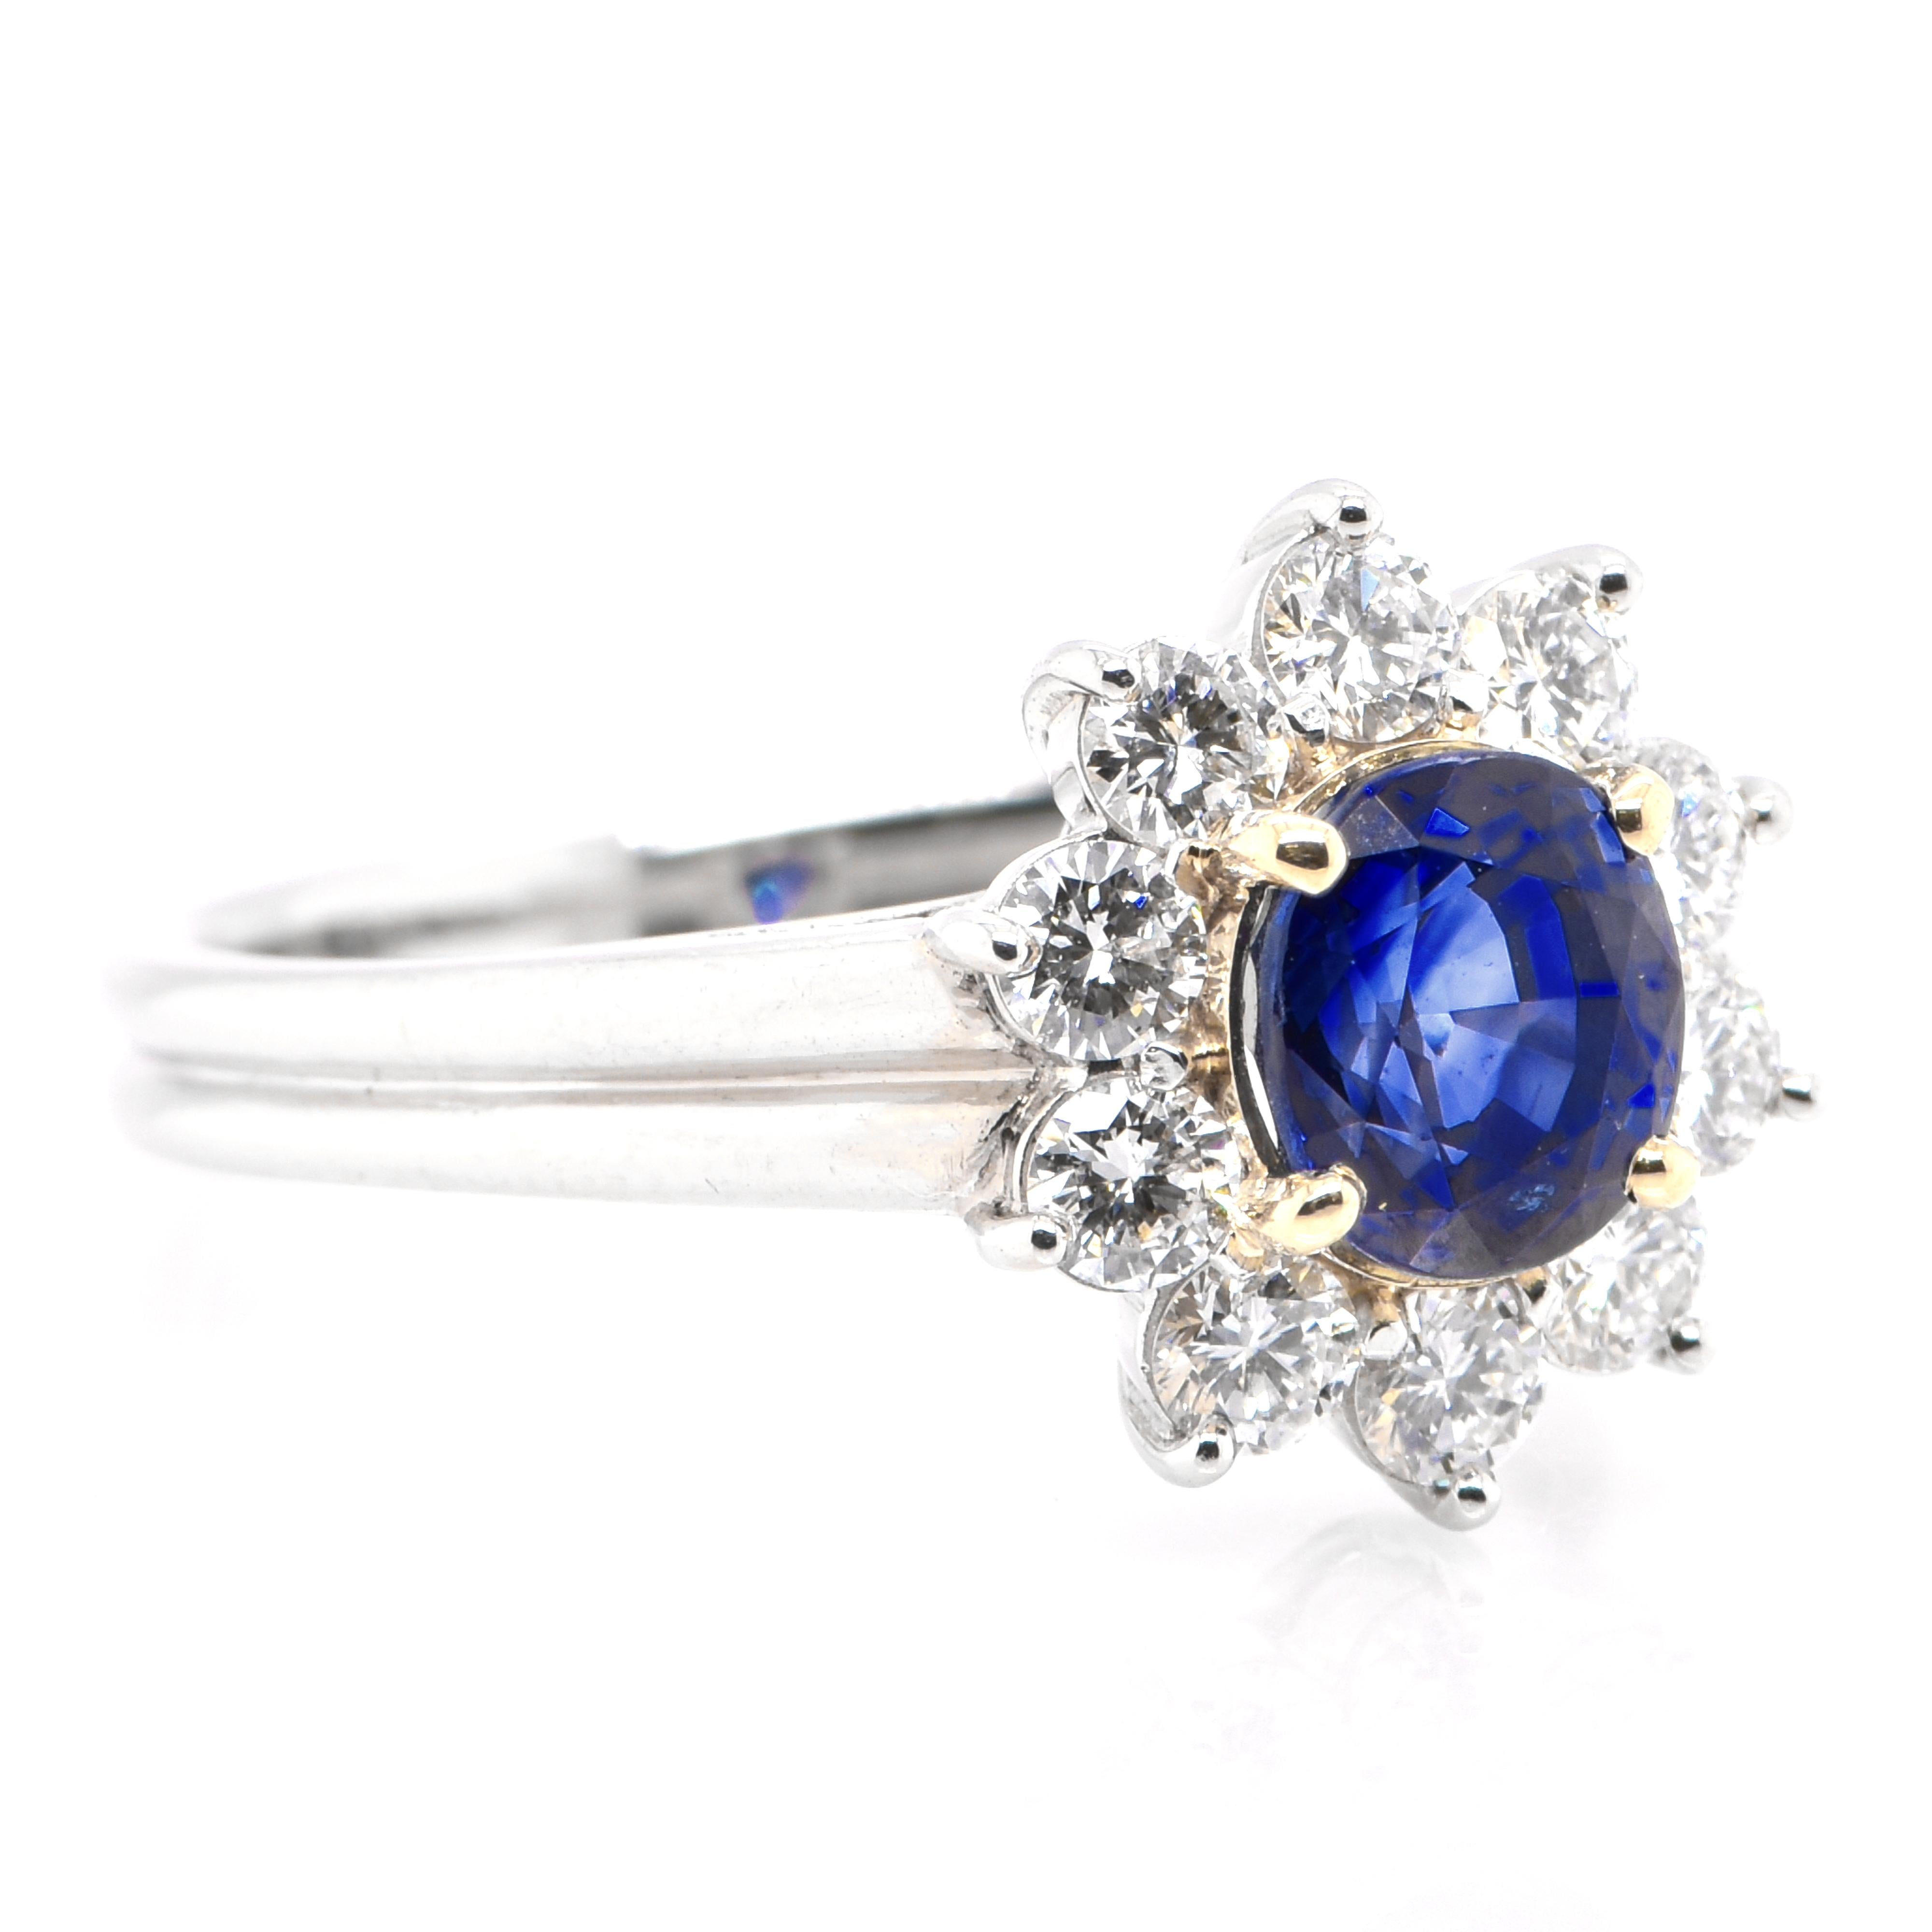 Modern 1.53 Carat Natural Blue Sapphire & Diamond Ring Set in Platinum and 18K Gold